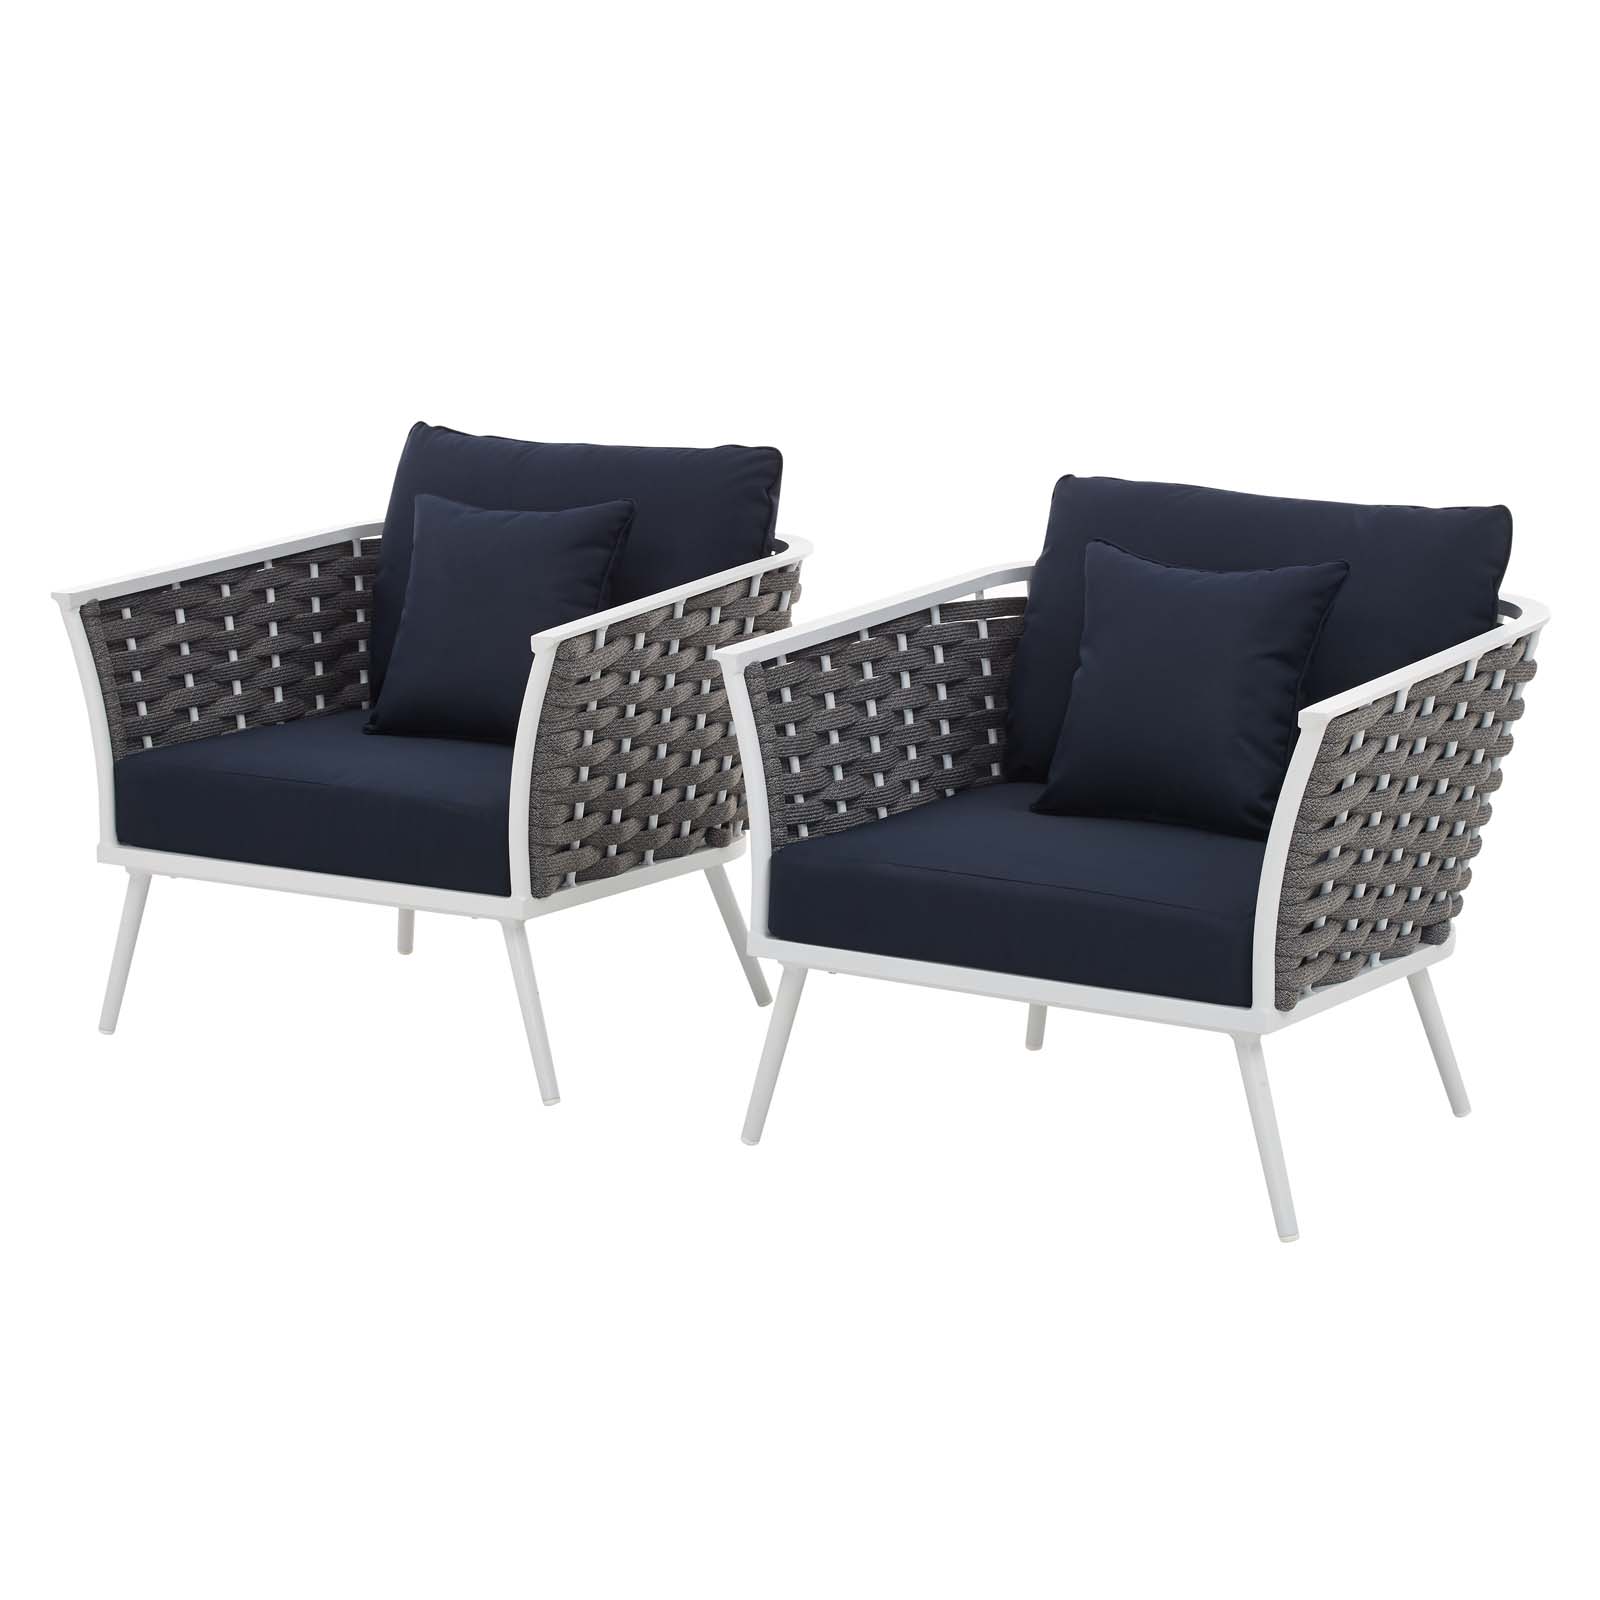 Modern Contemporary Urban Design Outdoor Patio Balcony Garden Furniture Lounge Chair Armchair, Set of Two, Fabric Aluminium, White Navy - image 1 of 6